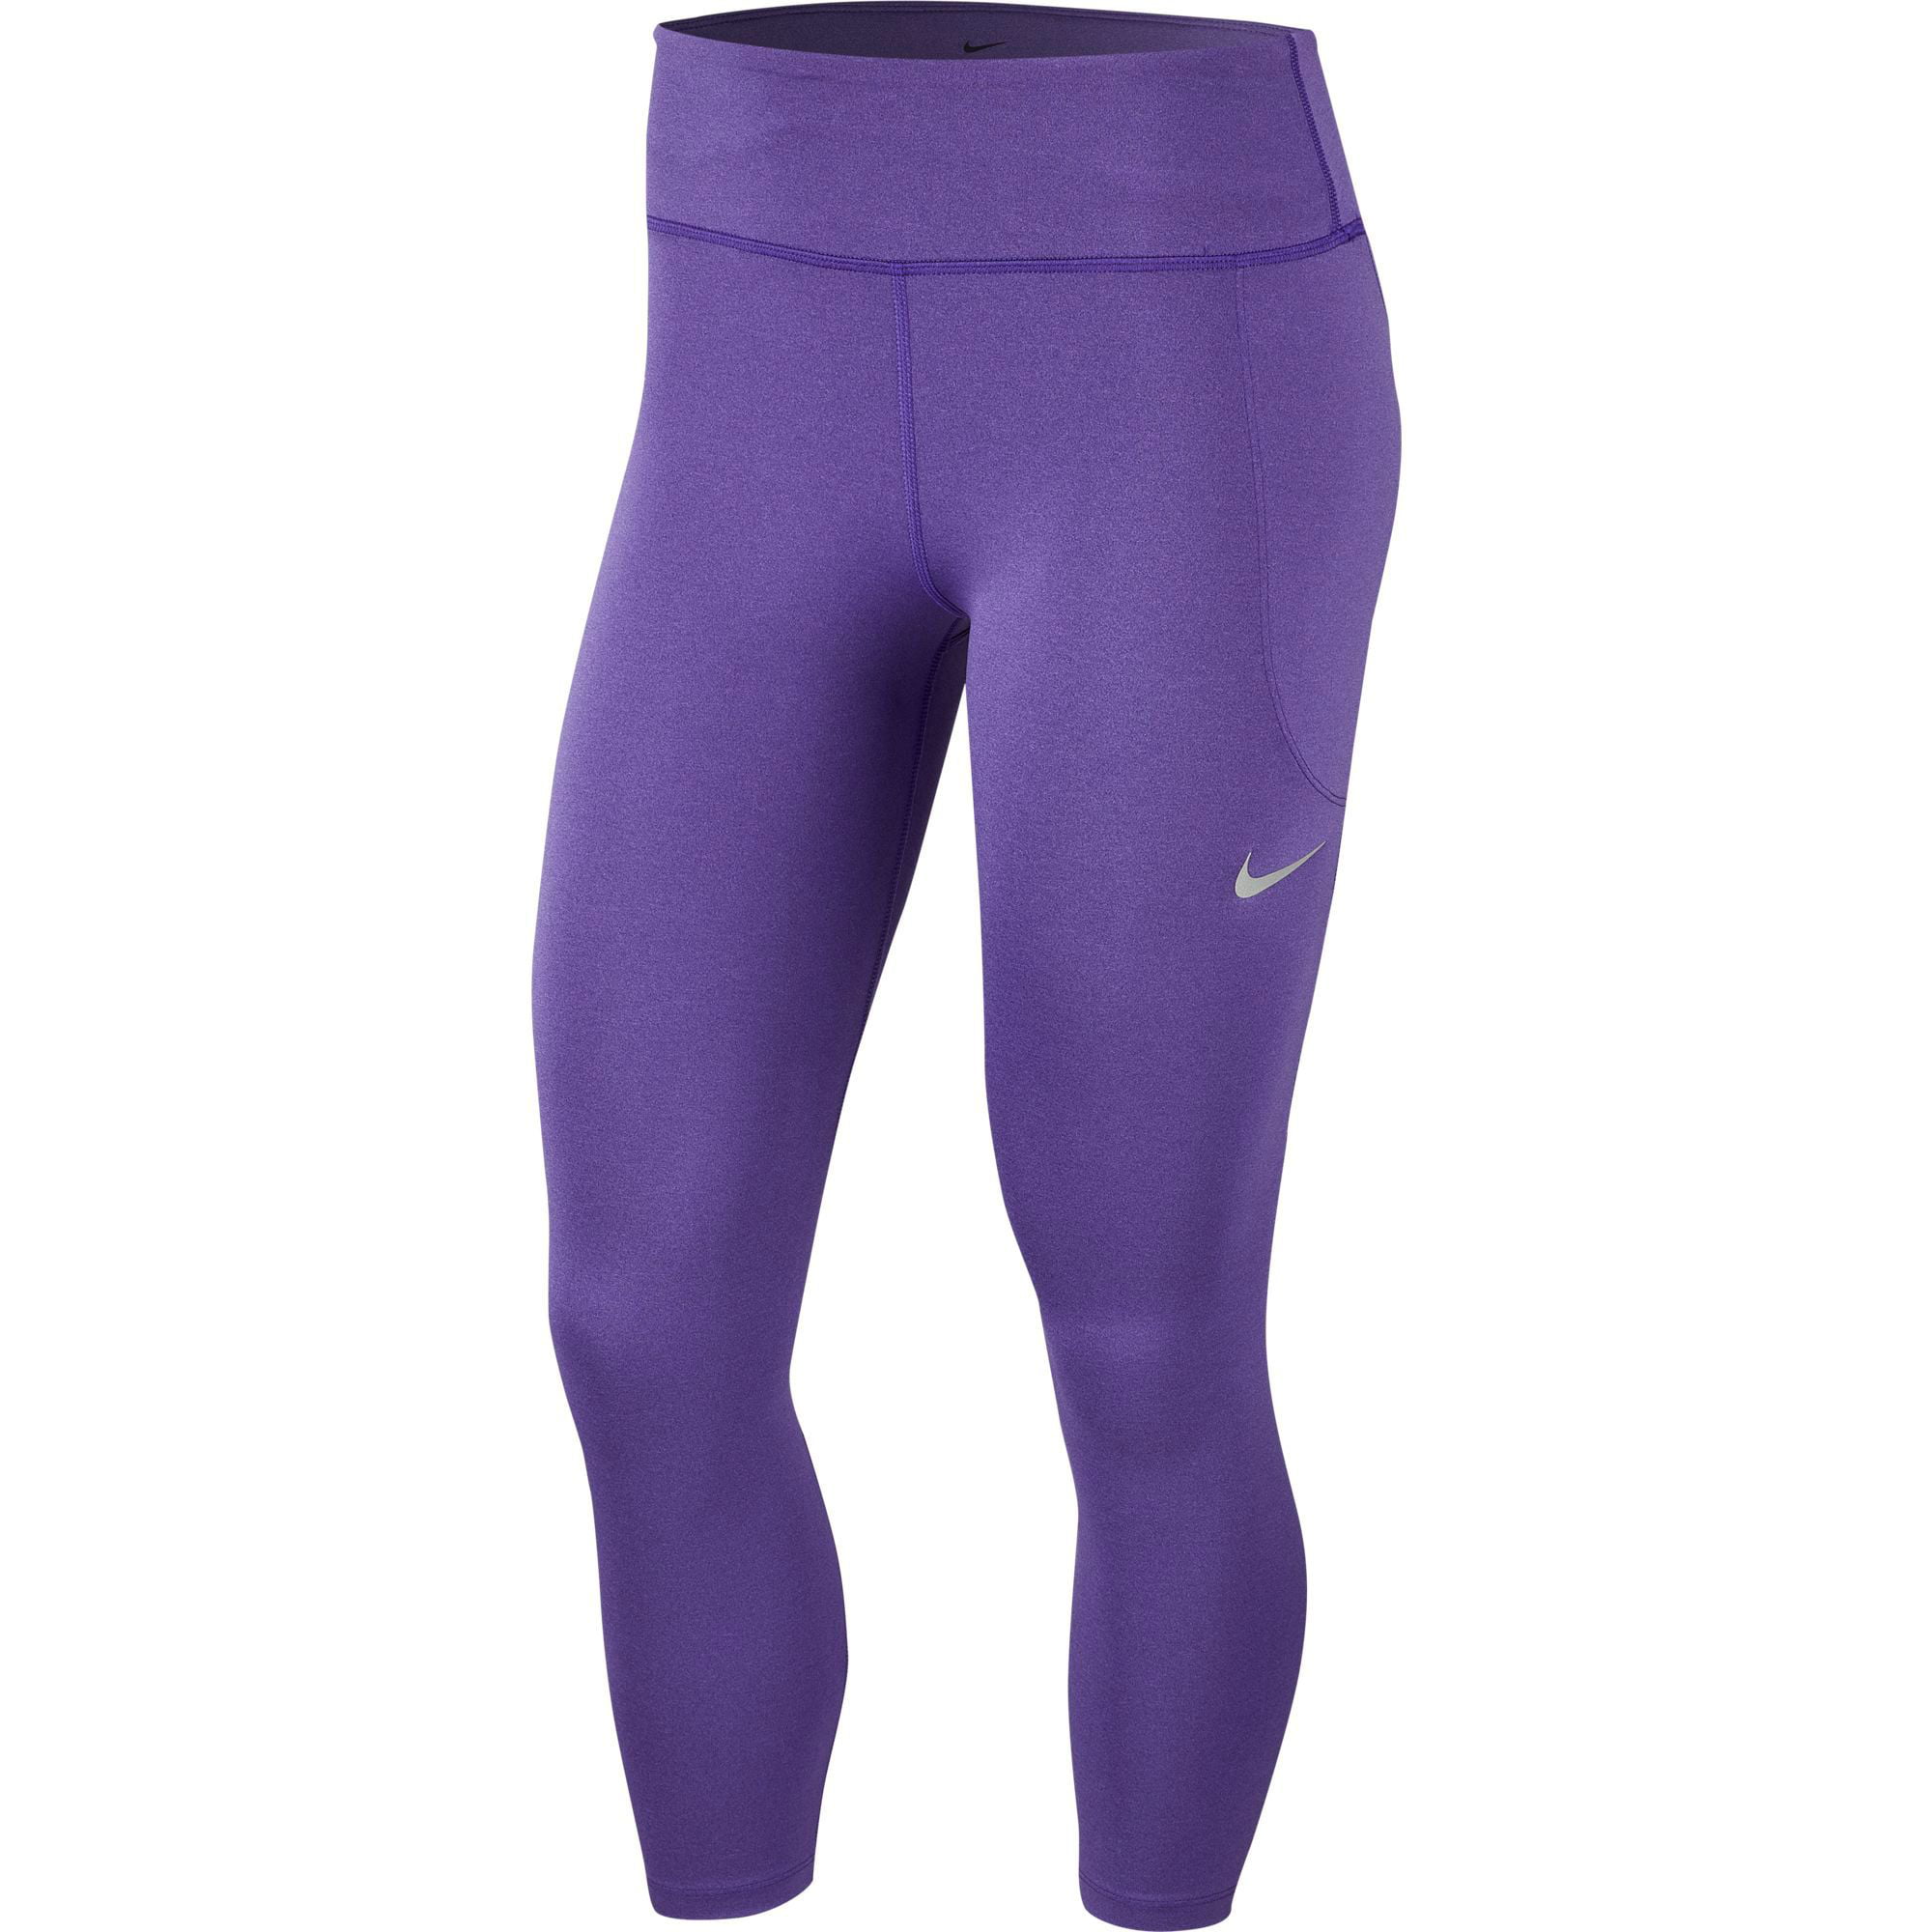 Nike - Nike Women's Fast 7/8 Running Cropped tights - Walmart.com ...